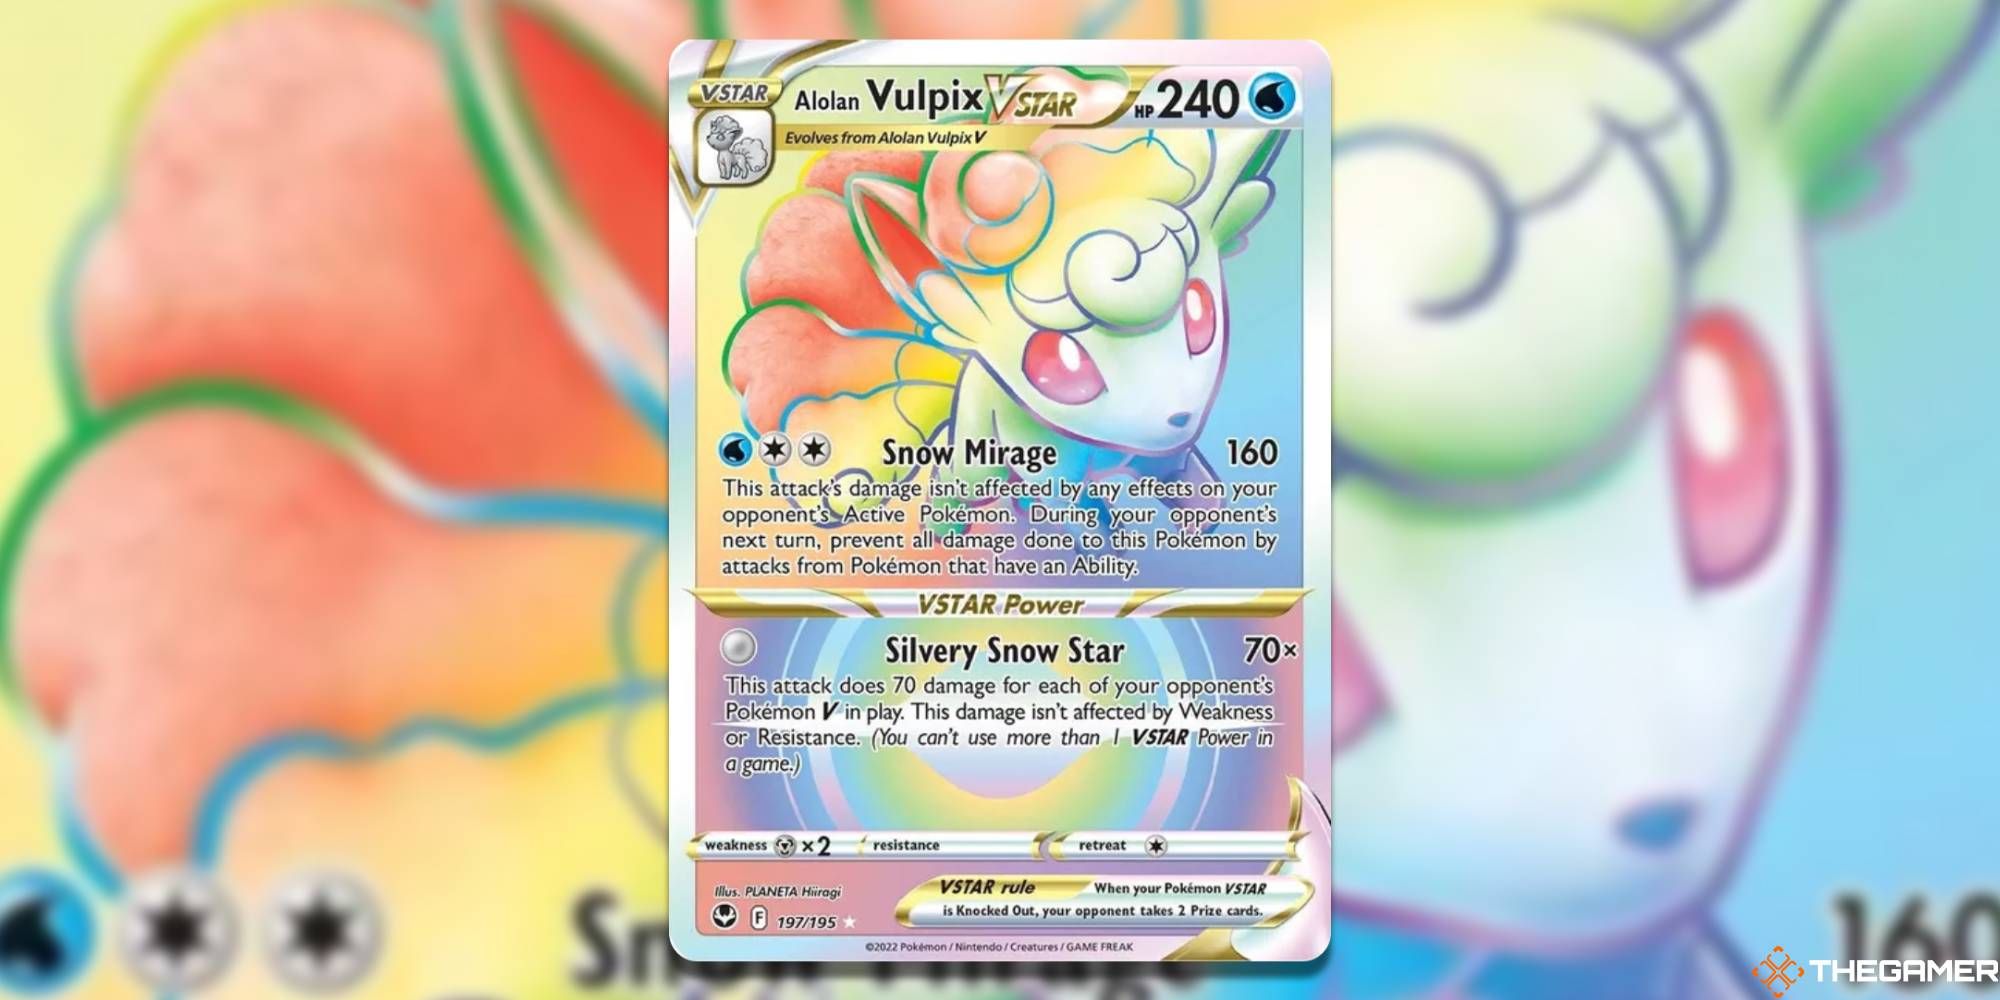 Alolan Vulpix VSTAR Rainbow Rare from Pokemon TCG with blurred background